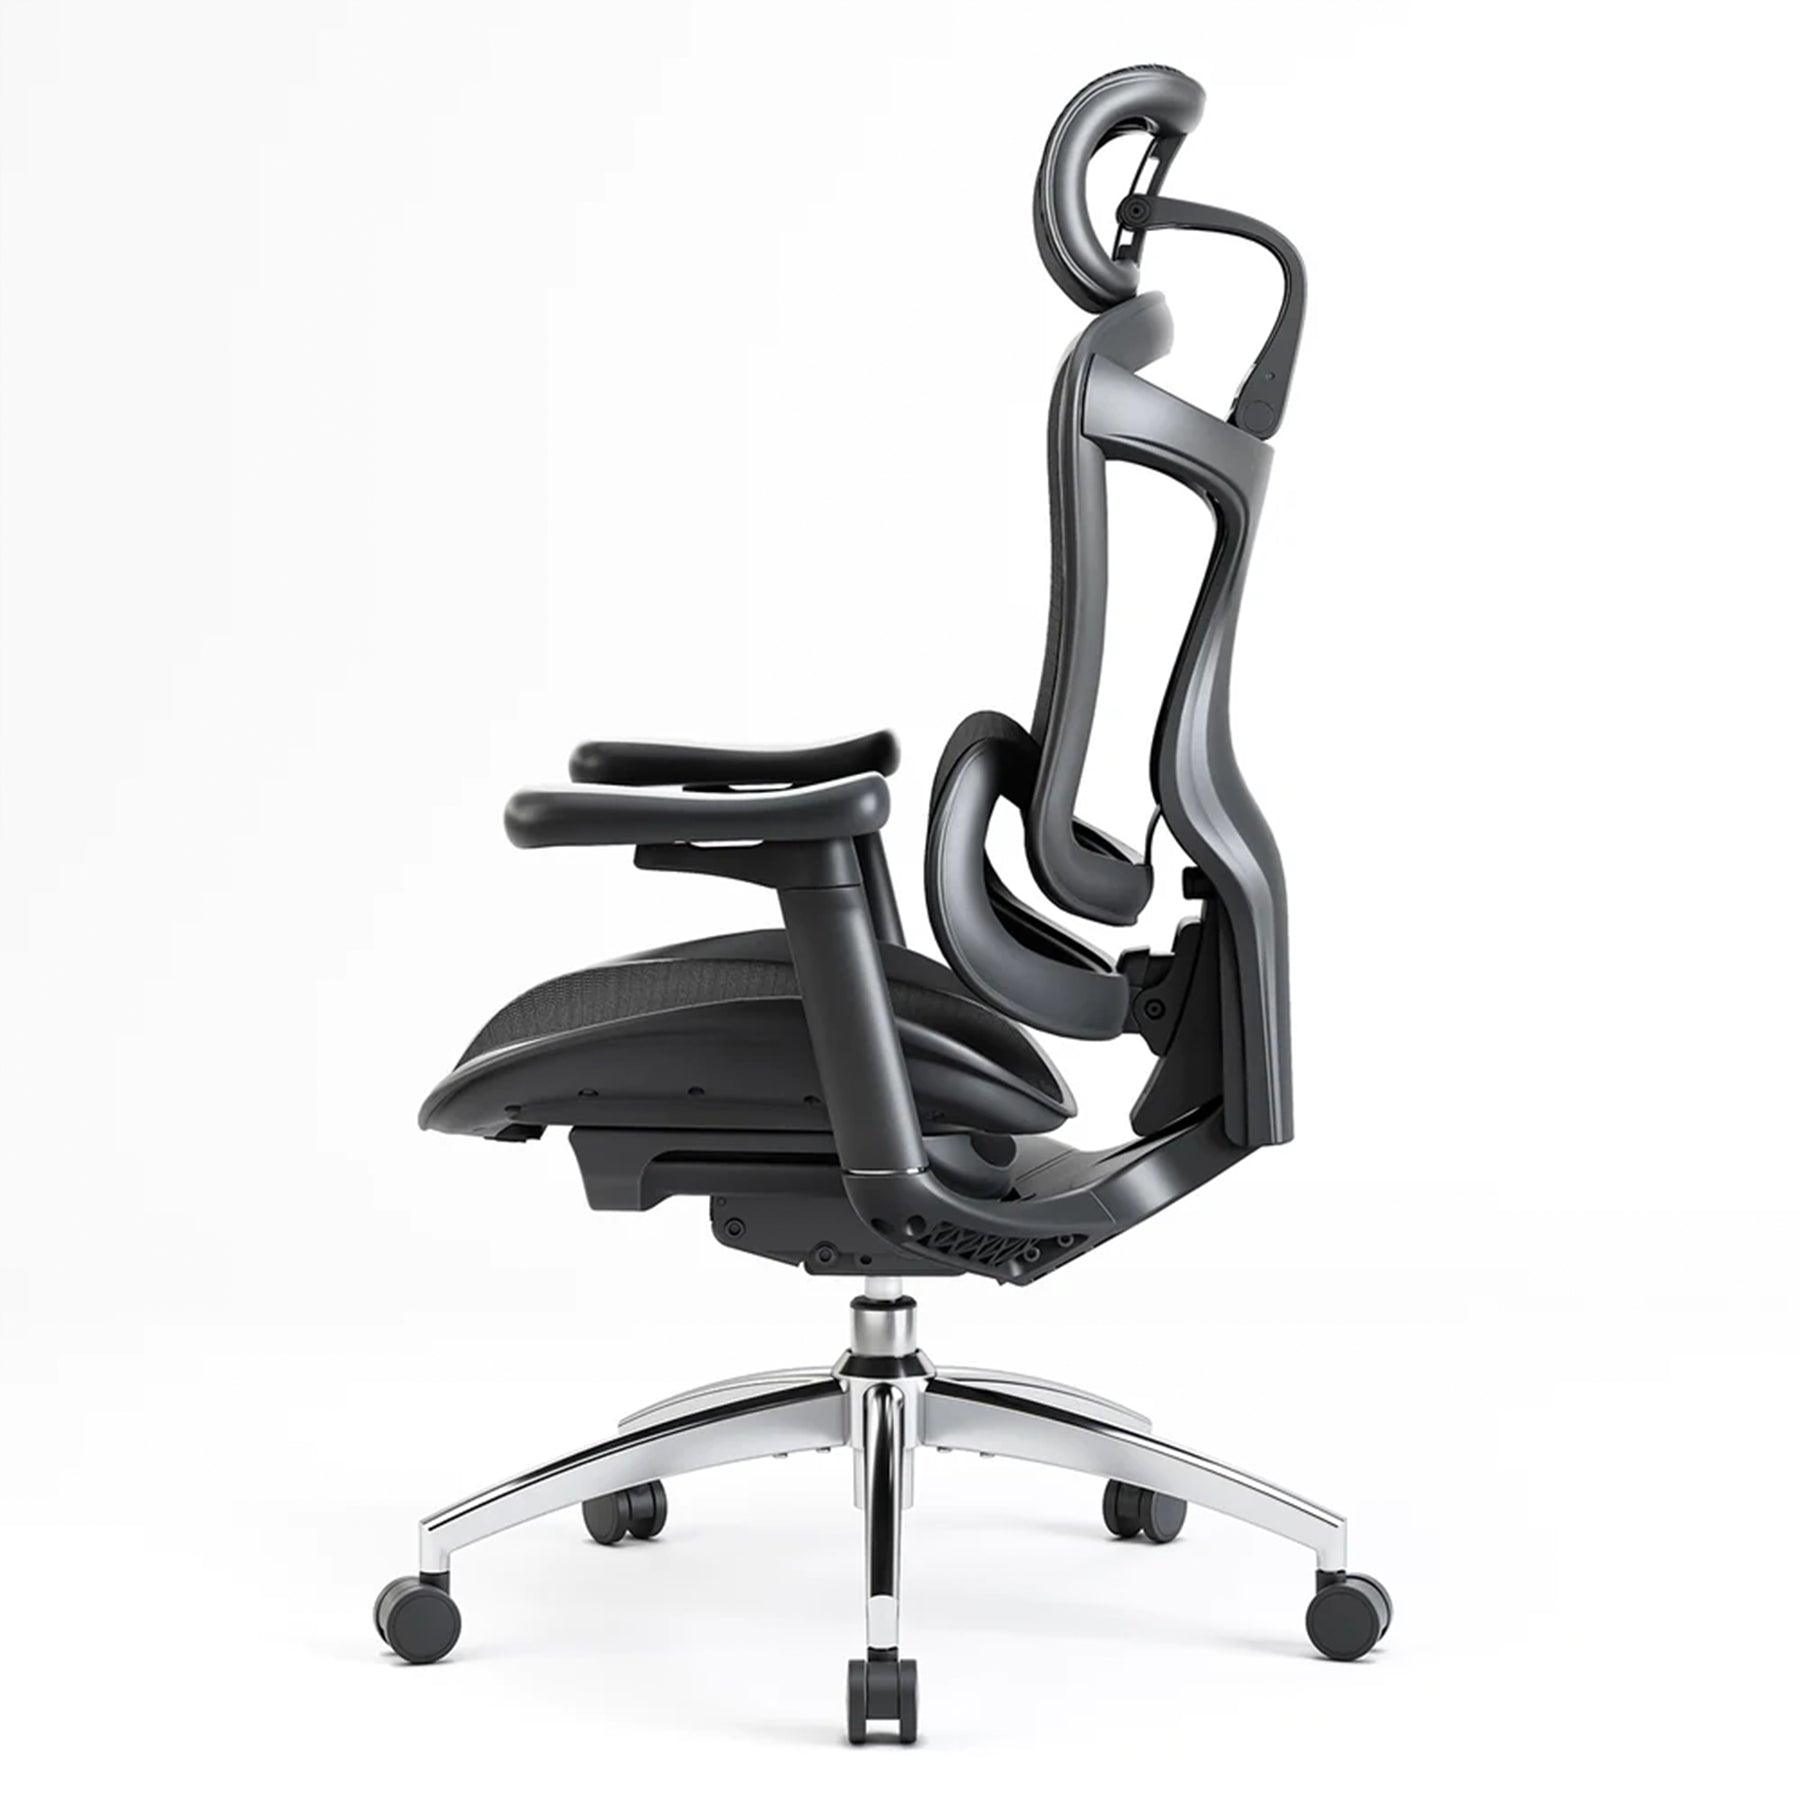 Sihoo Doro C300 Ergonomic Office Chair review: specs, cost